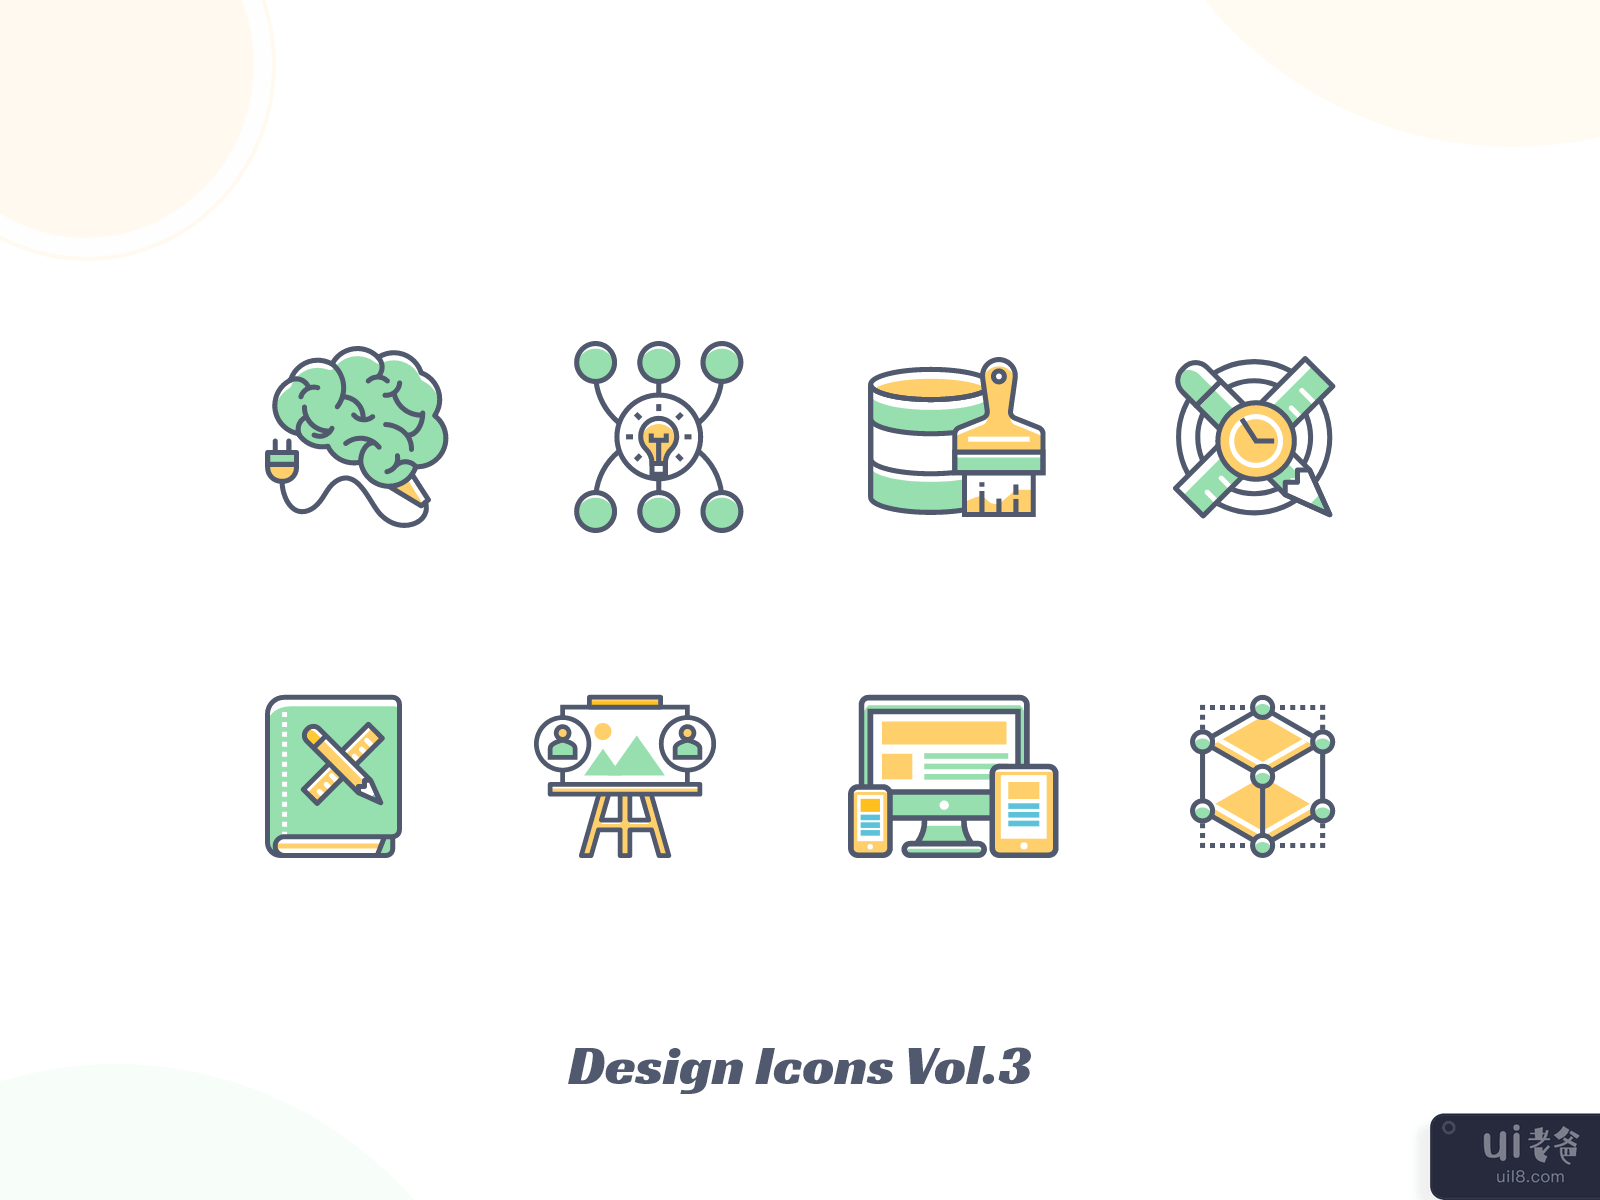 设计图标 Vol.3(Design Icons Vol.3)插图